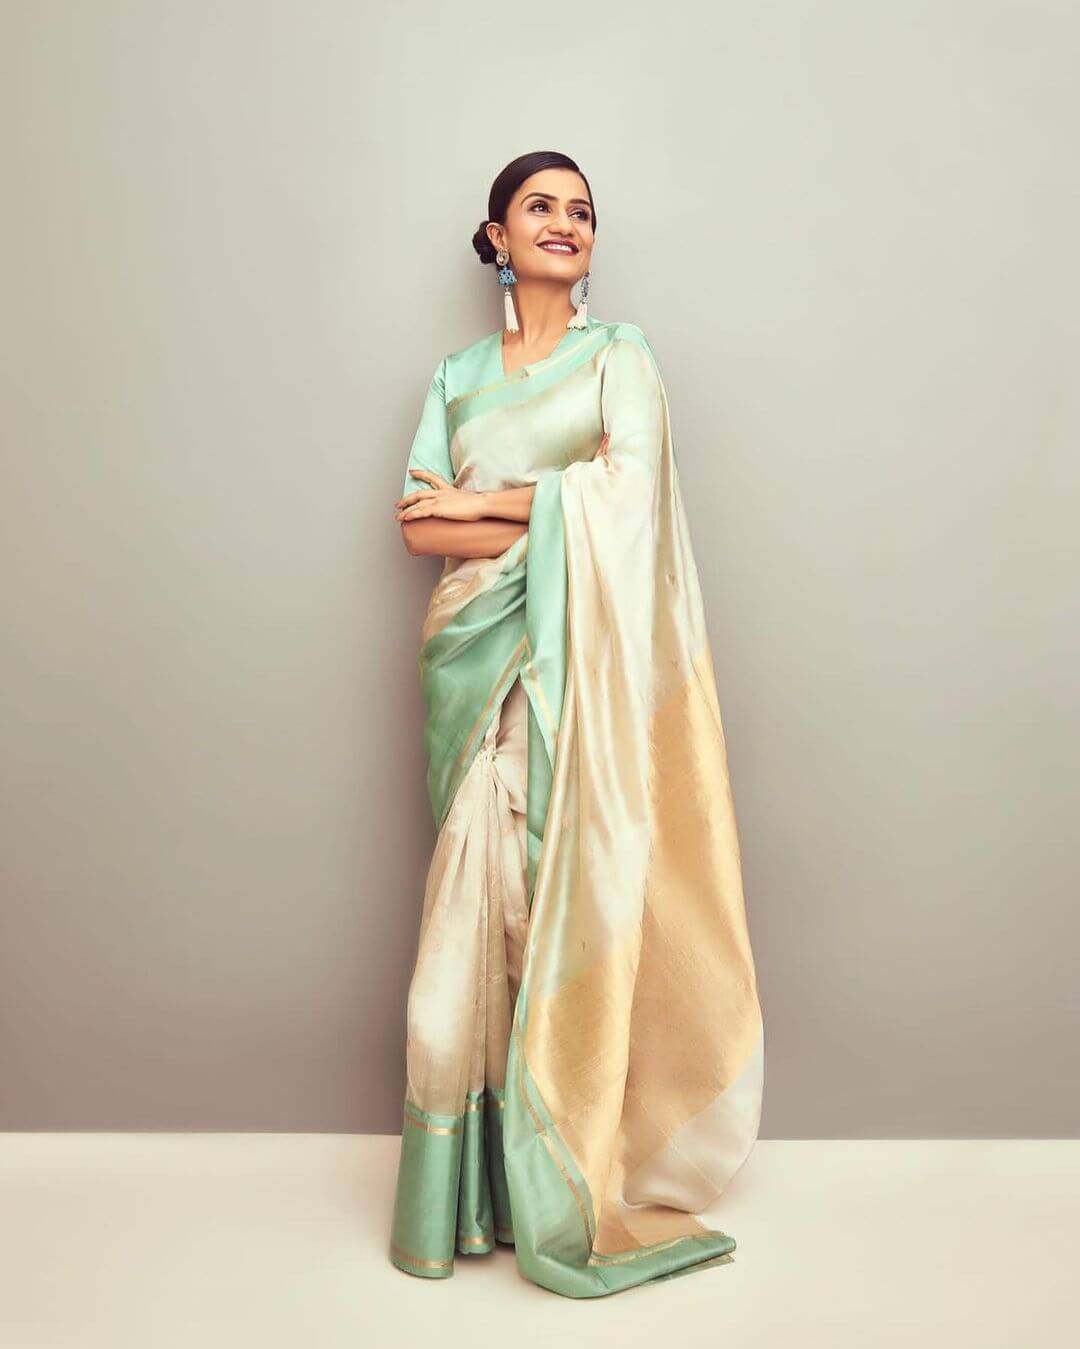 Amruta Subhash Look Beautiful In Blue And White Silk Saree Outfit Amruta Subhash Outfit And Looks